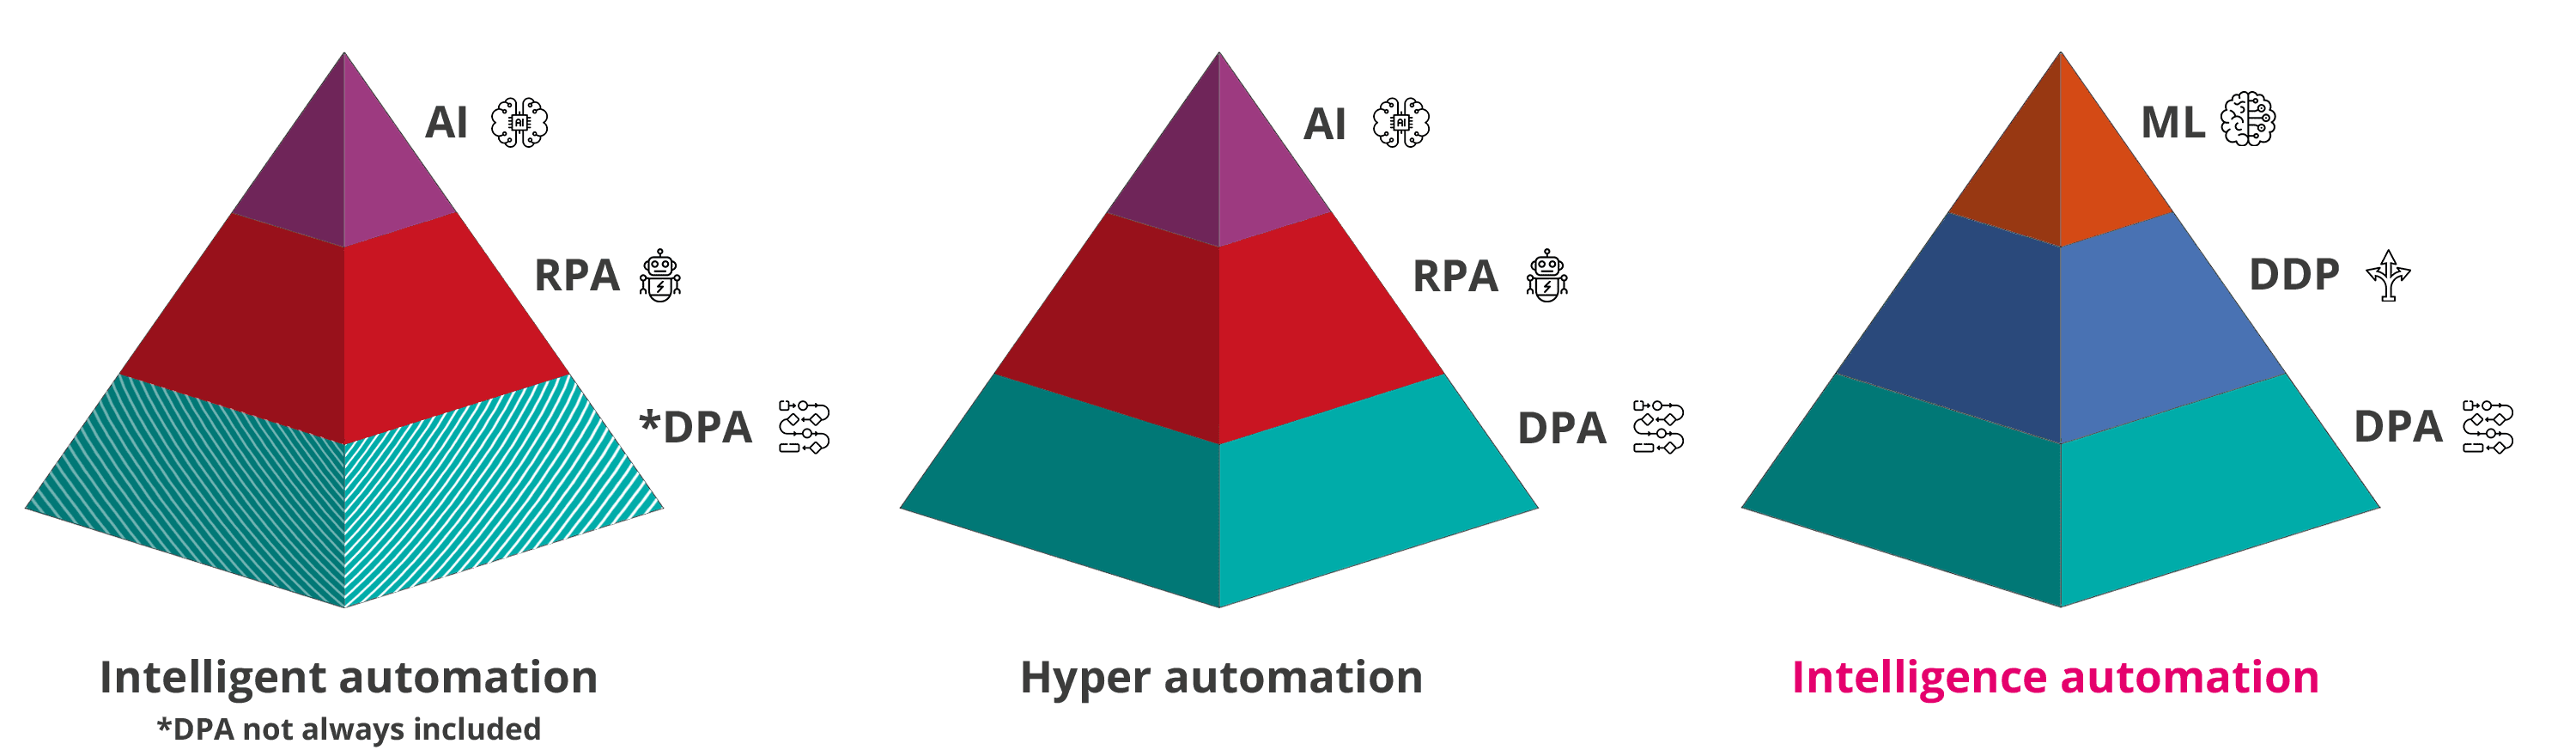 ai-powered automation vs intelligent automation vs hyper automation 